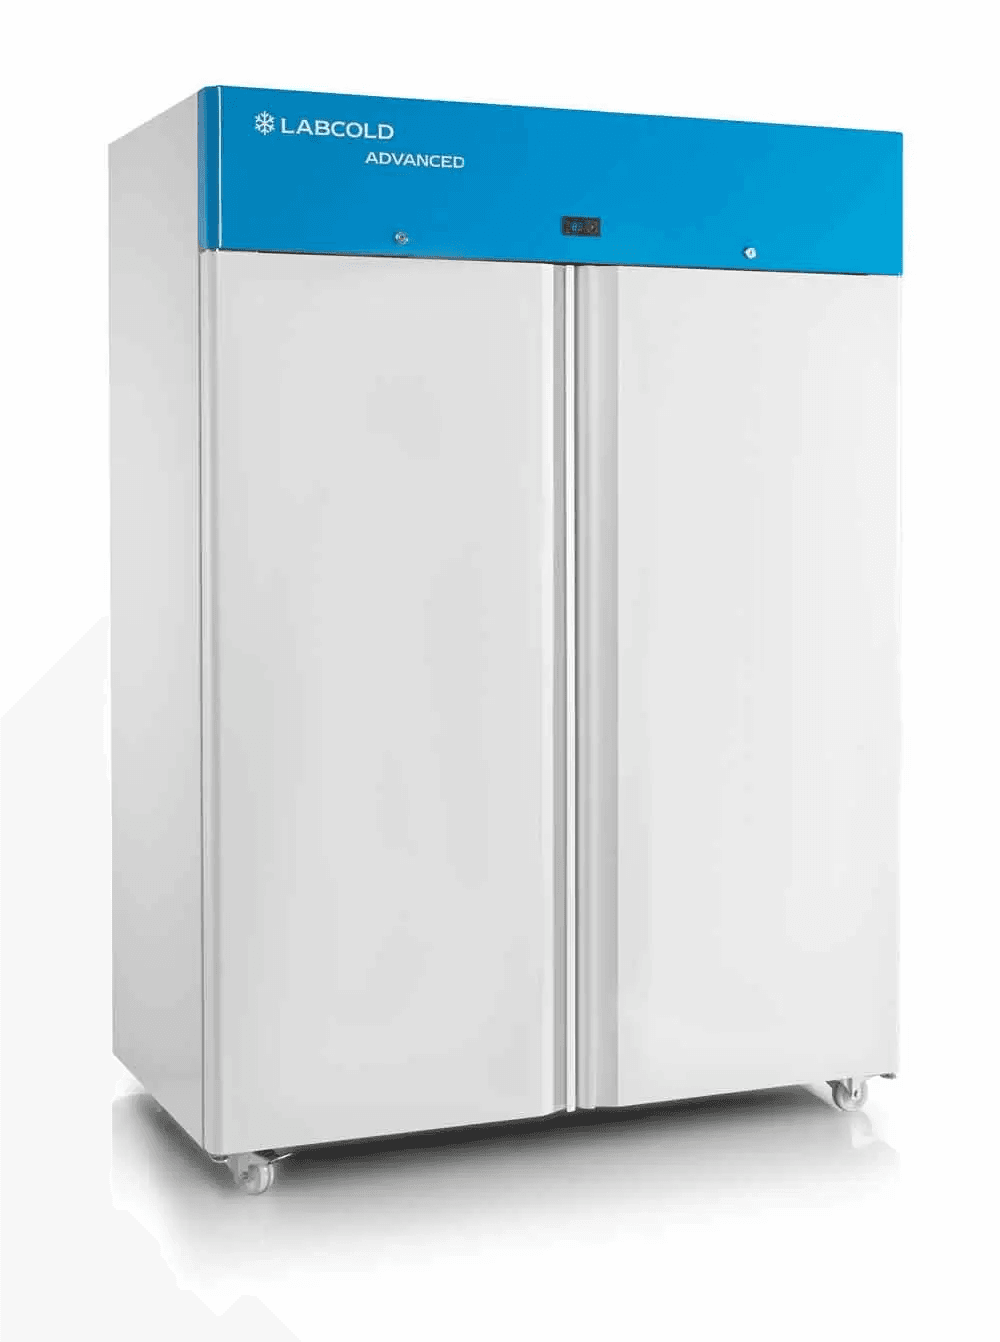 Labcold RAFR44263 Free Standing Laboratory Advanced Freezer, -18°C to -24°C Temperature Range ,  1300 Litre Capacity